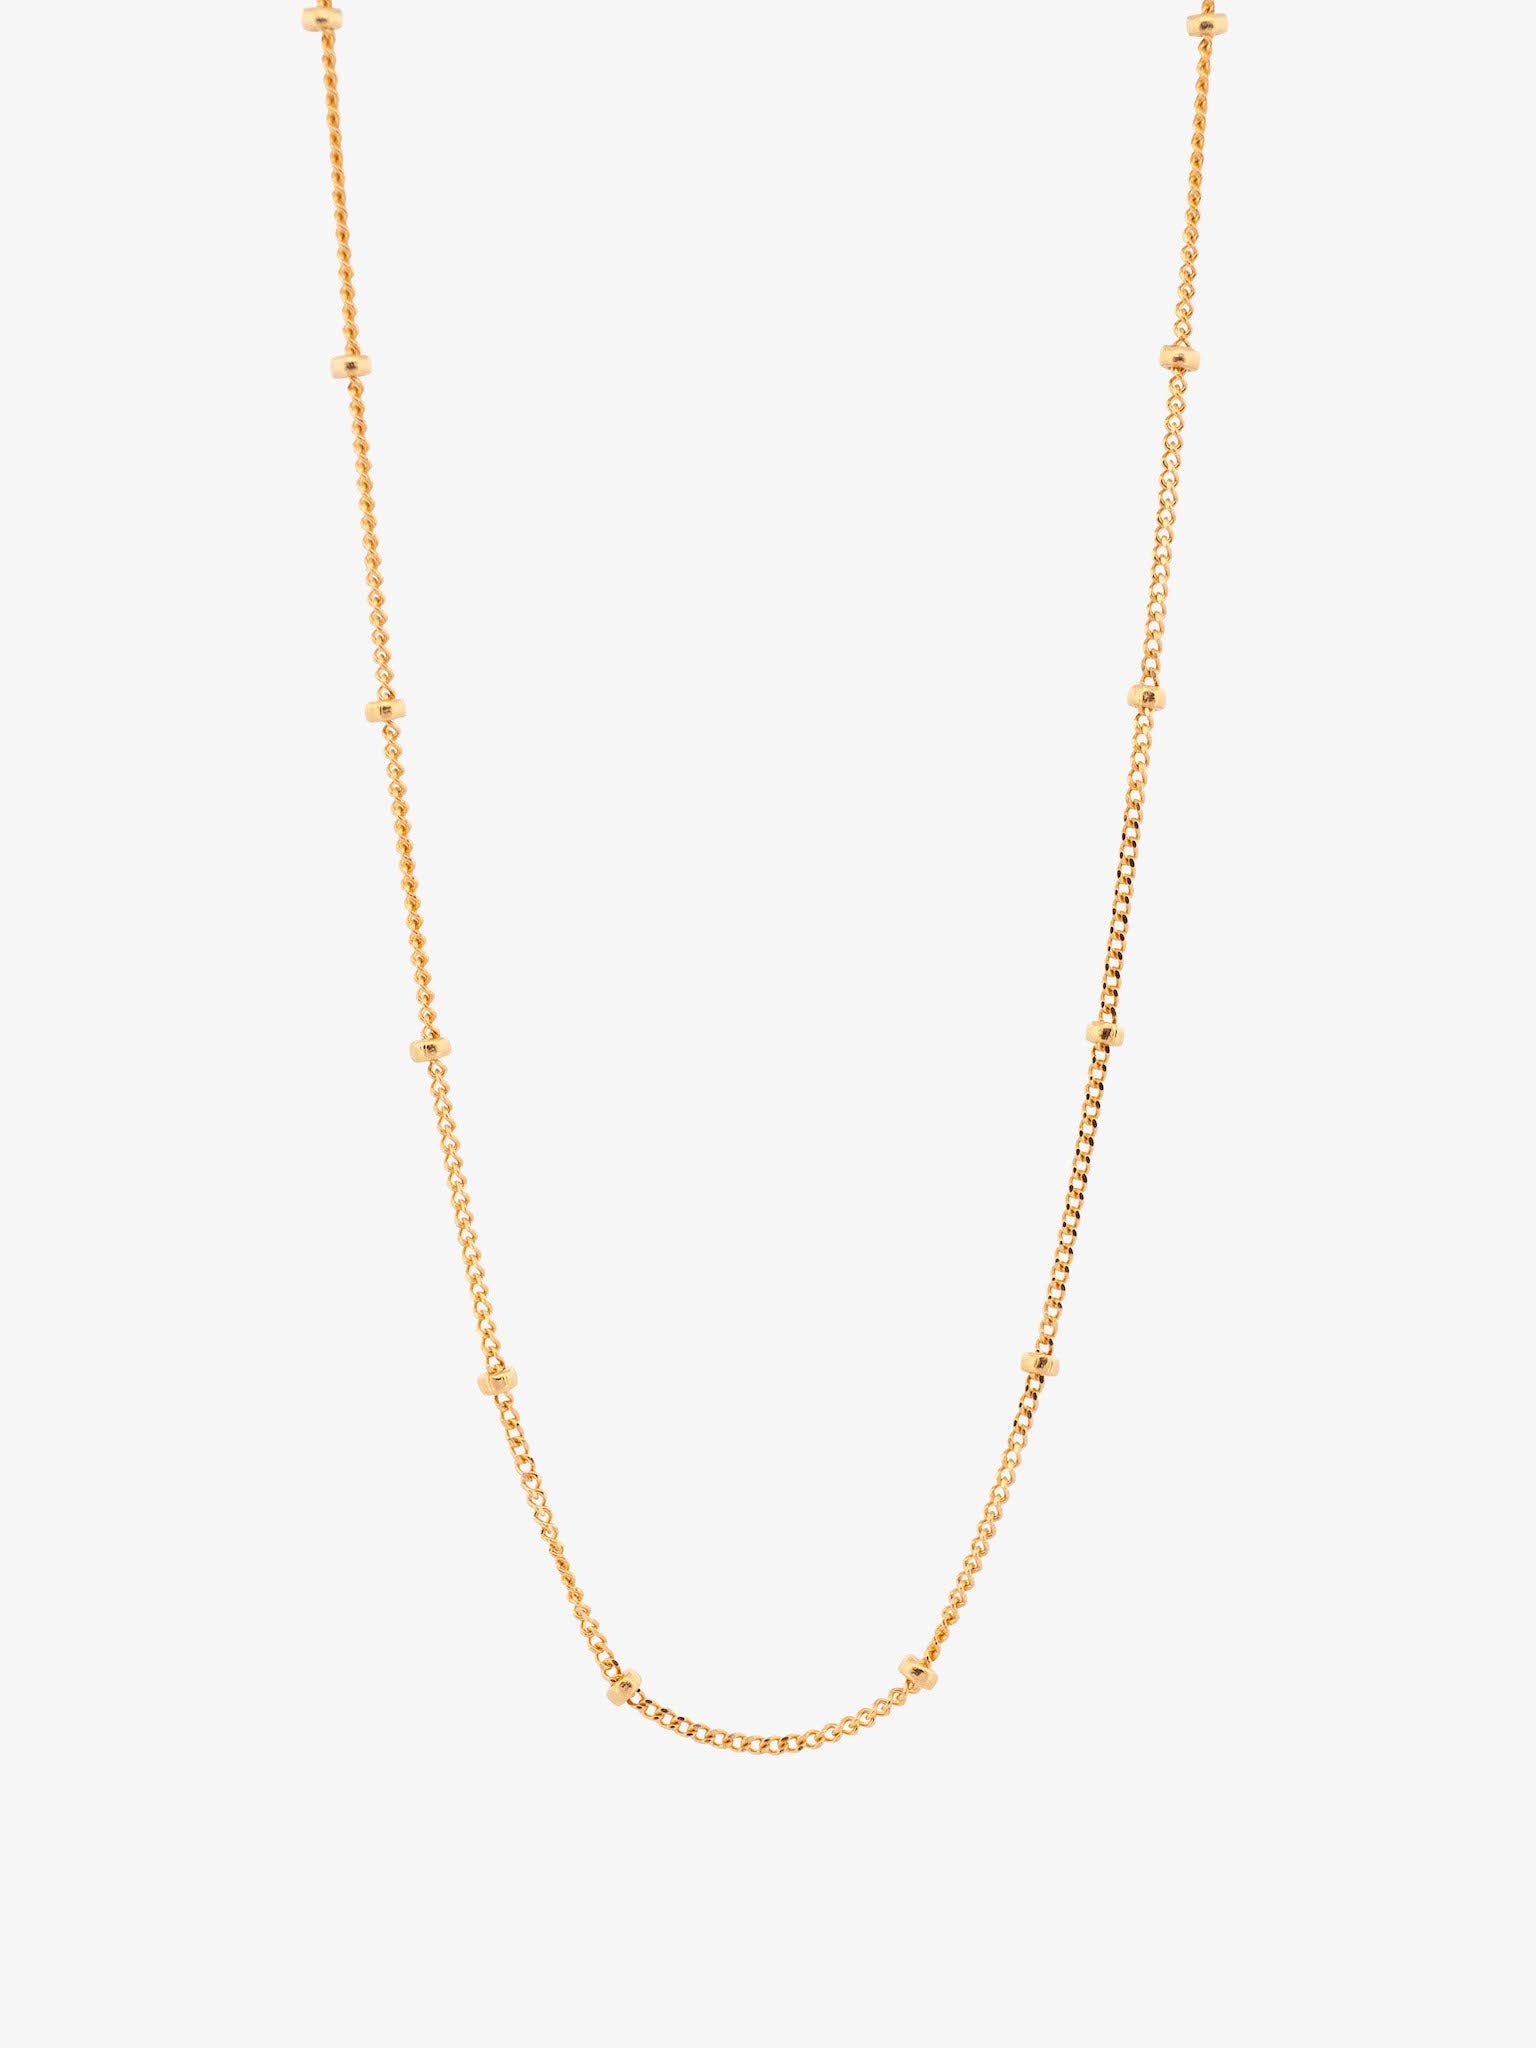 Satellite chain necklace